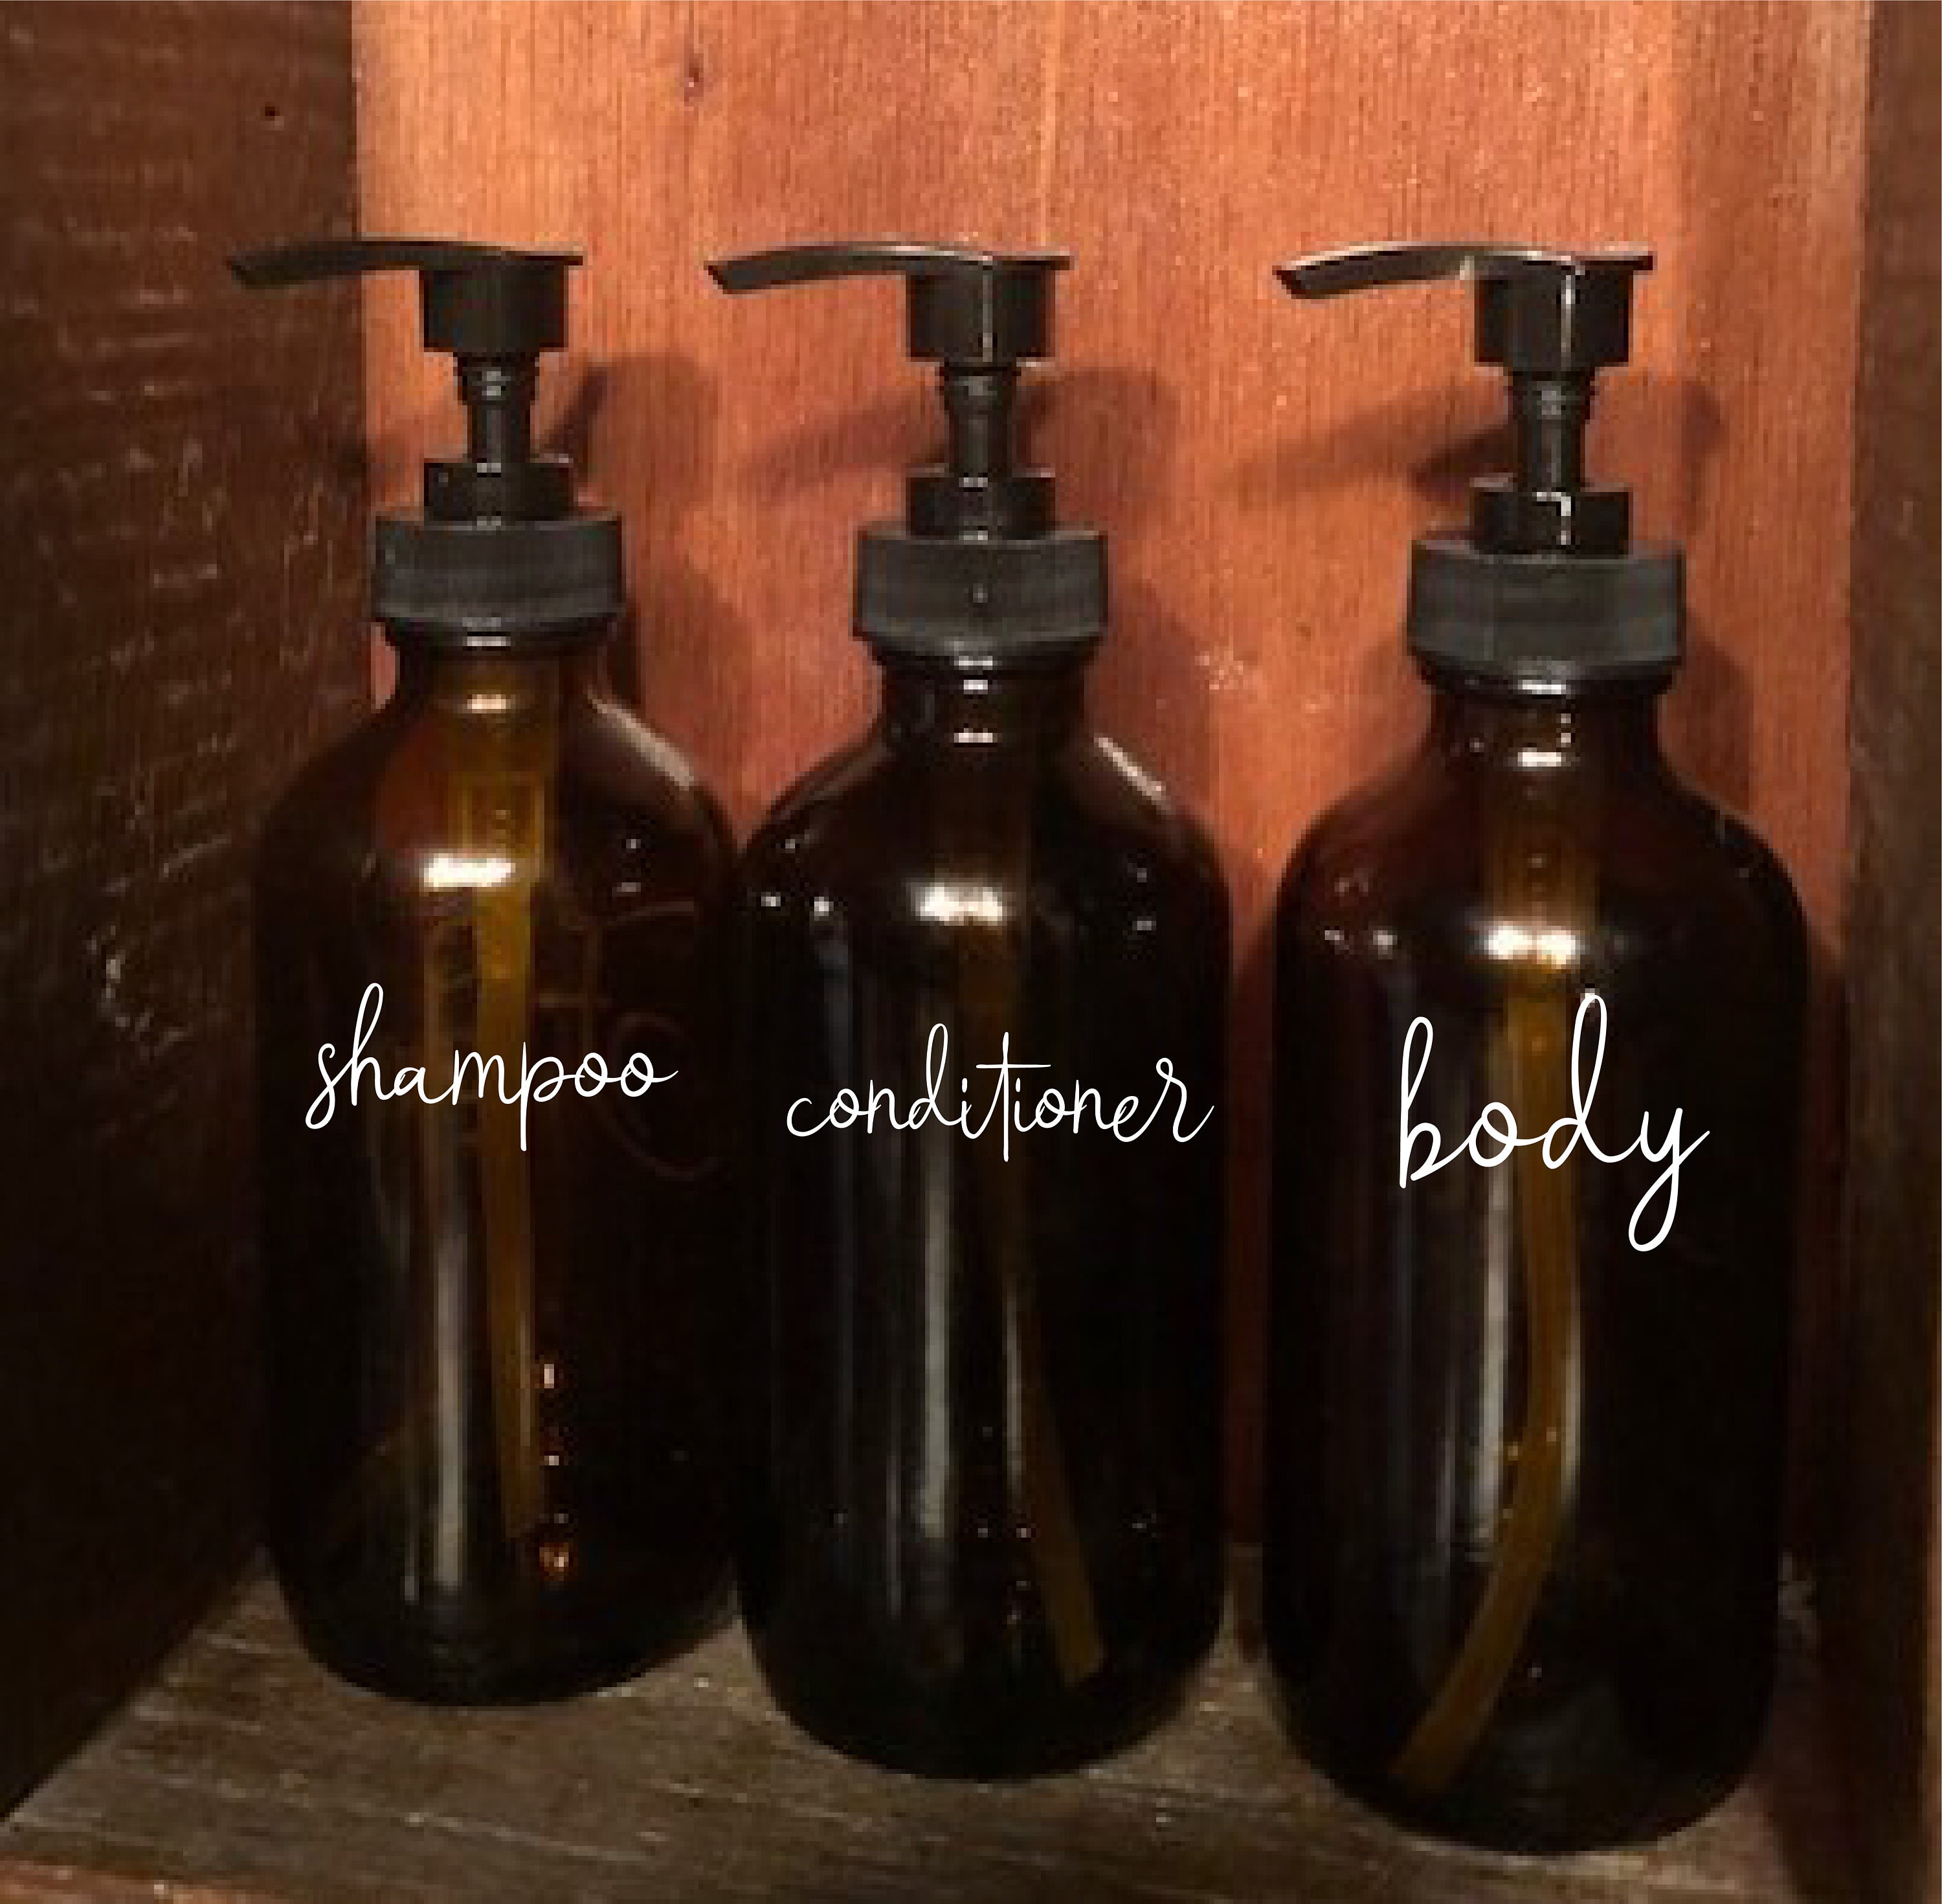 lytter Ydmyg loop 16 Oz Shampoo Conditioner Body Amber Glass Bottles Glass - Etsy